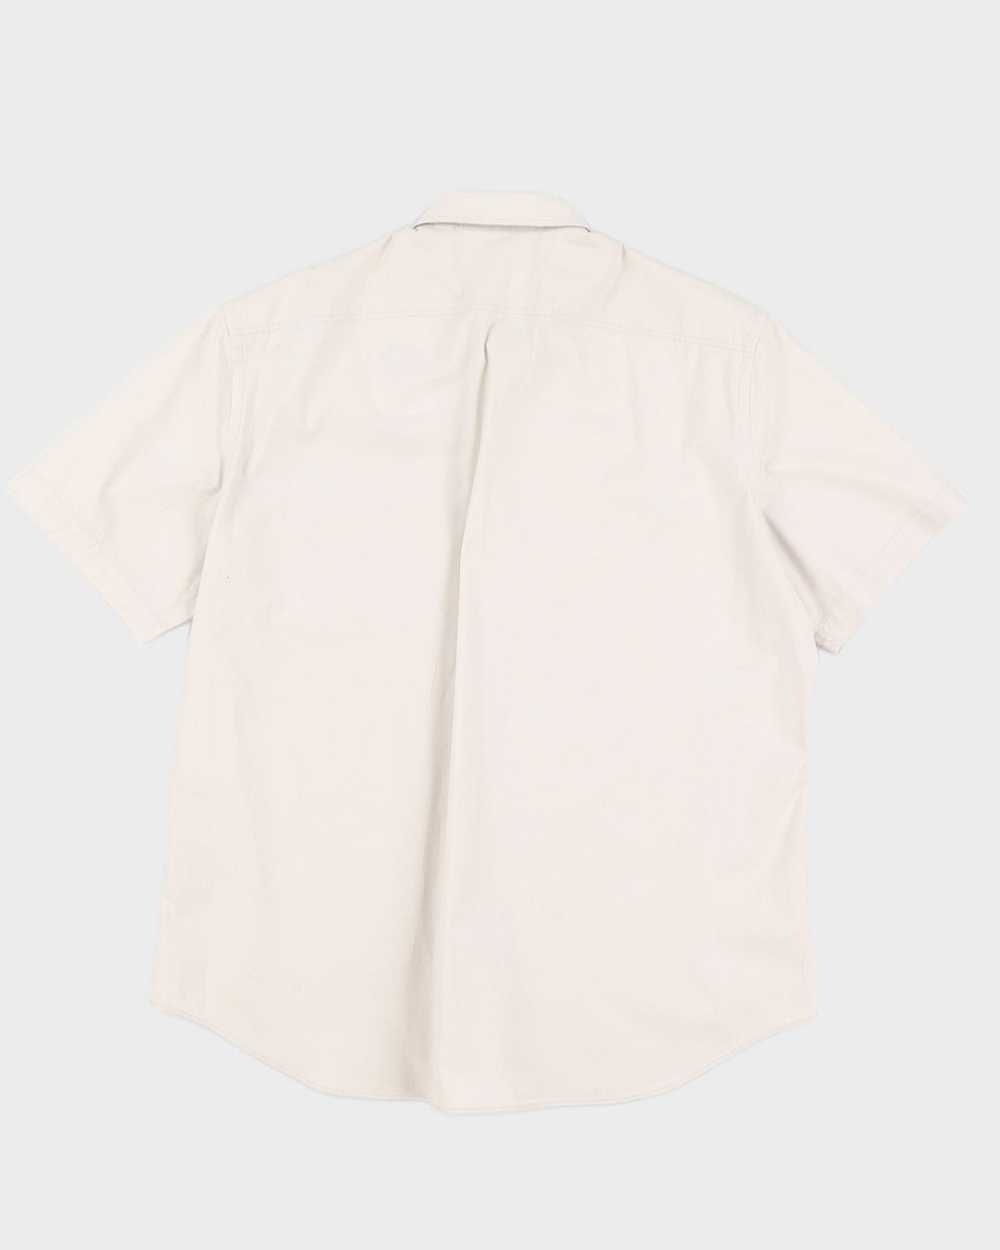 Burberry Brit Grey Short Sleeved Shirt - XL - image 2